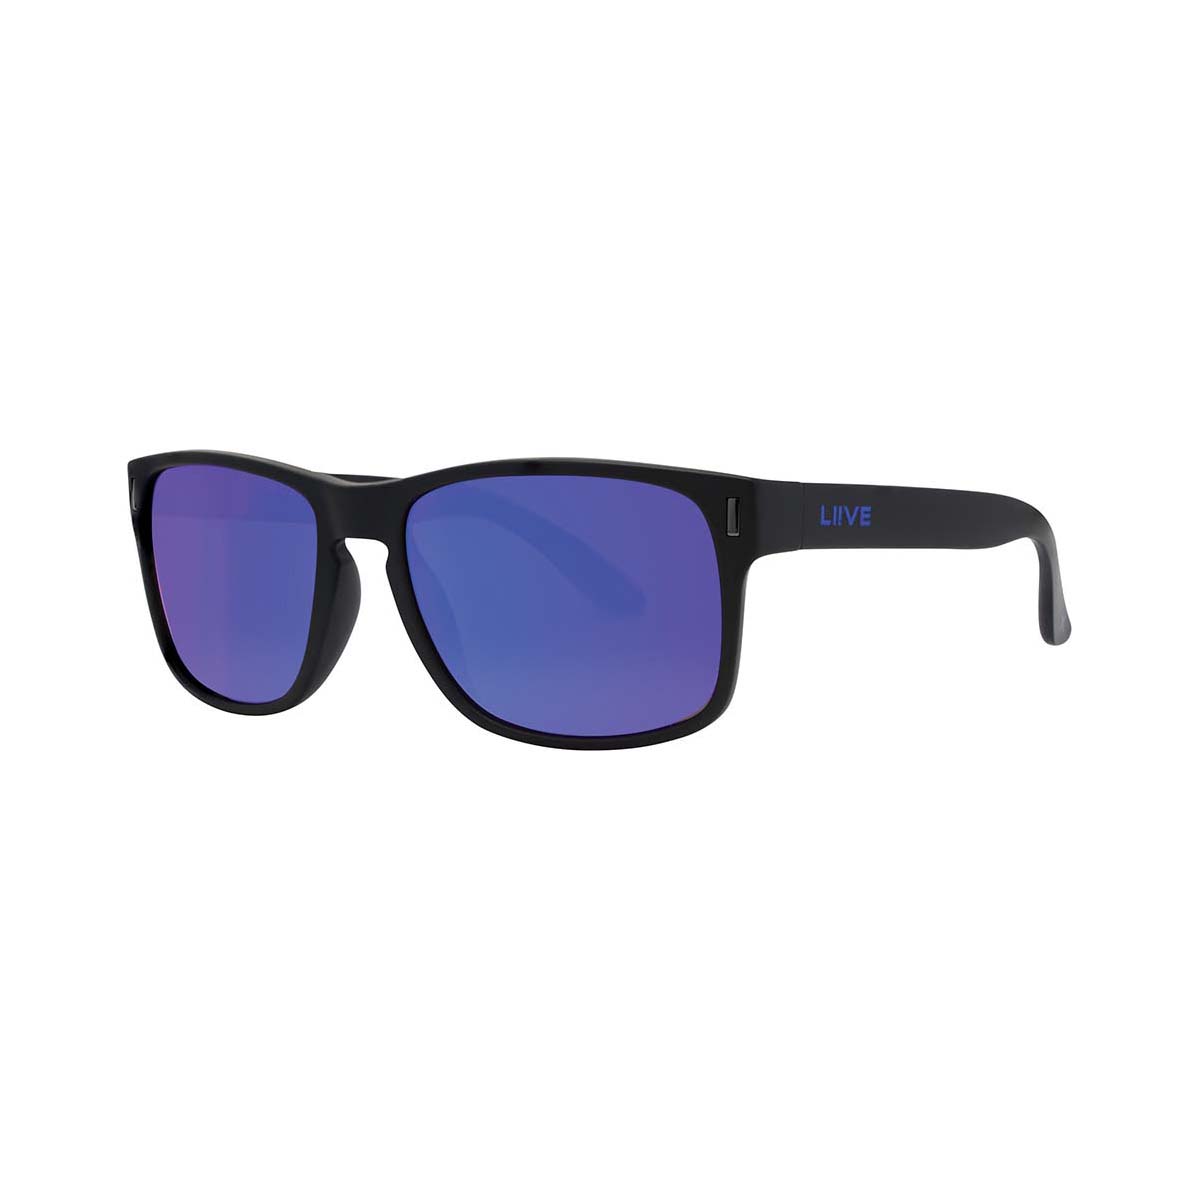 Liive X Wolf Men's Mirror Polarised Sunglasses Matt Black with Blue Lens